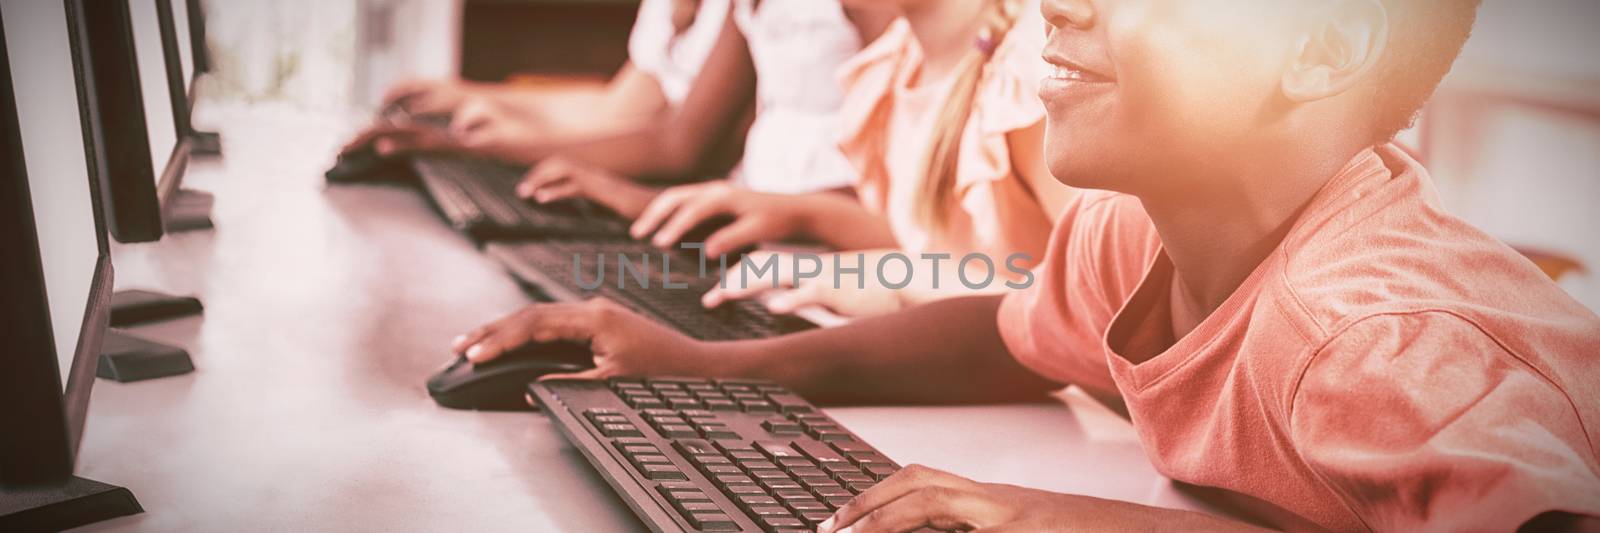 Children computer in classroom by Wavebreakmedia